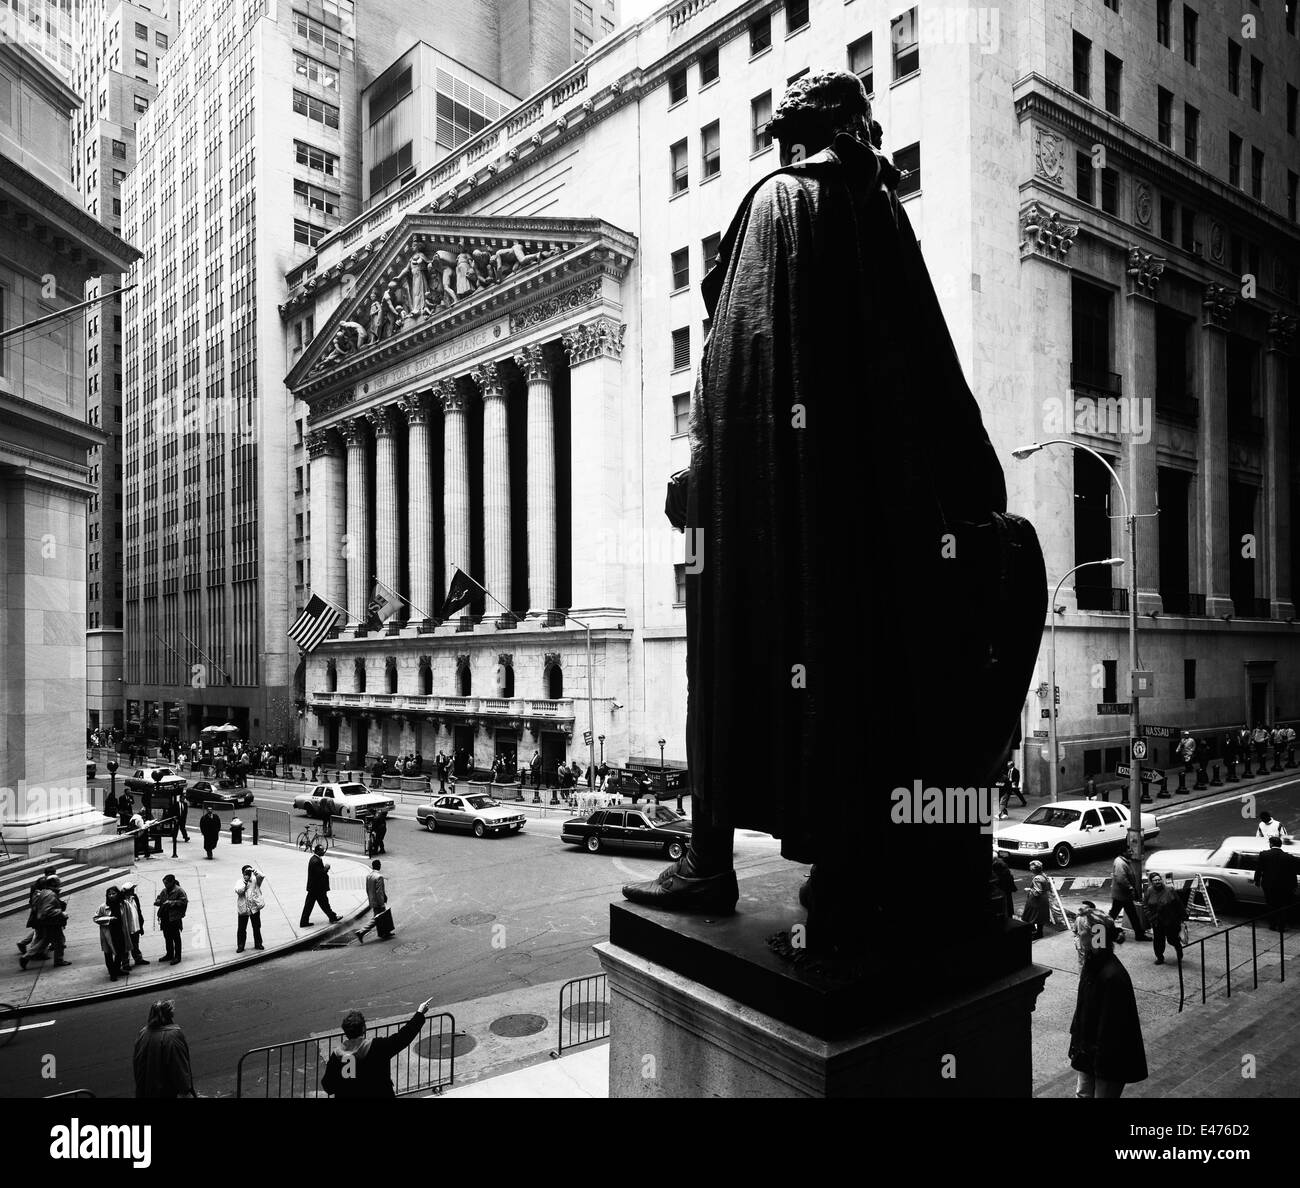 Vue du Federal Hall, Wall street, la statue de George Washington et d'une large façade sur rue de la Bourse, New York financial district, Manhattan, New York City, New York, NY, USA, United States of America Banque D'Images